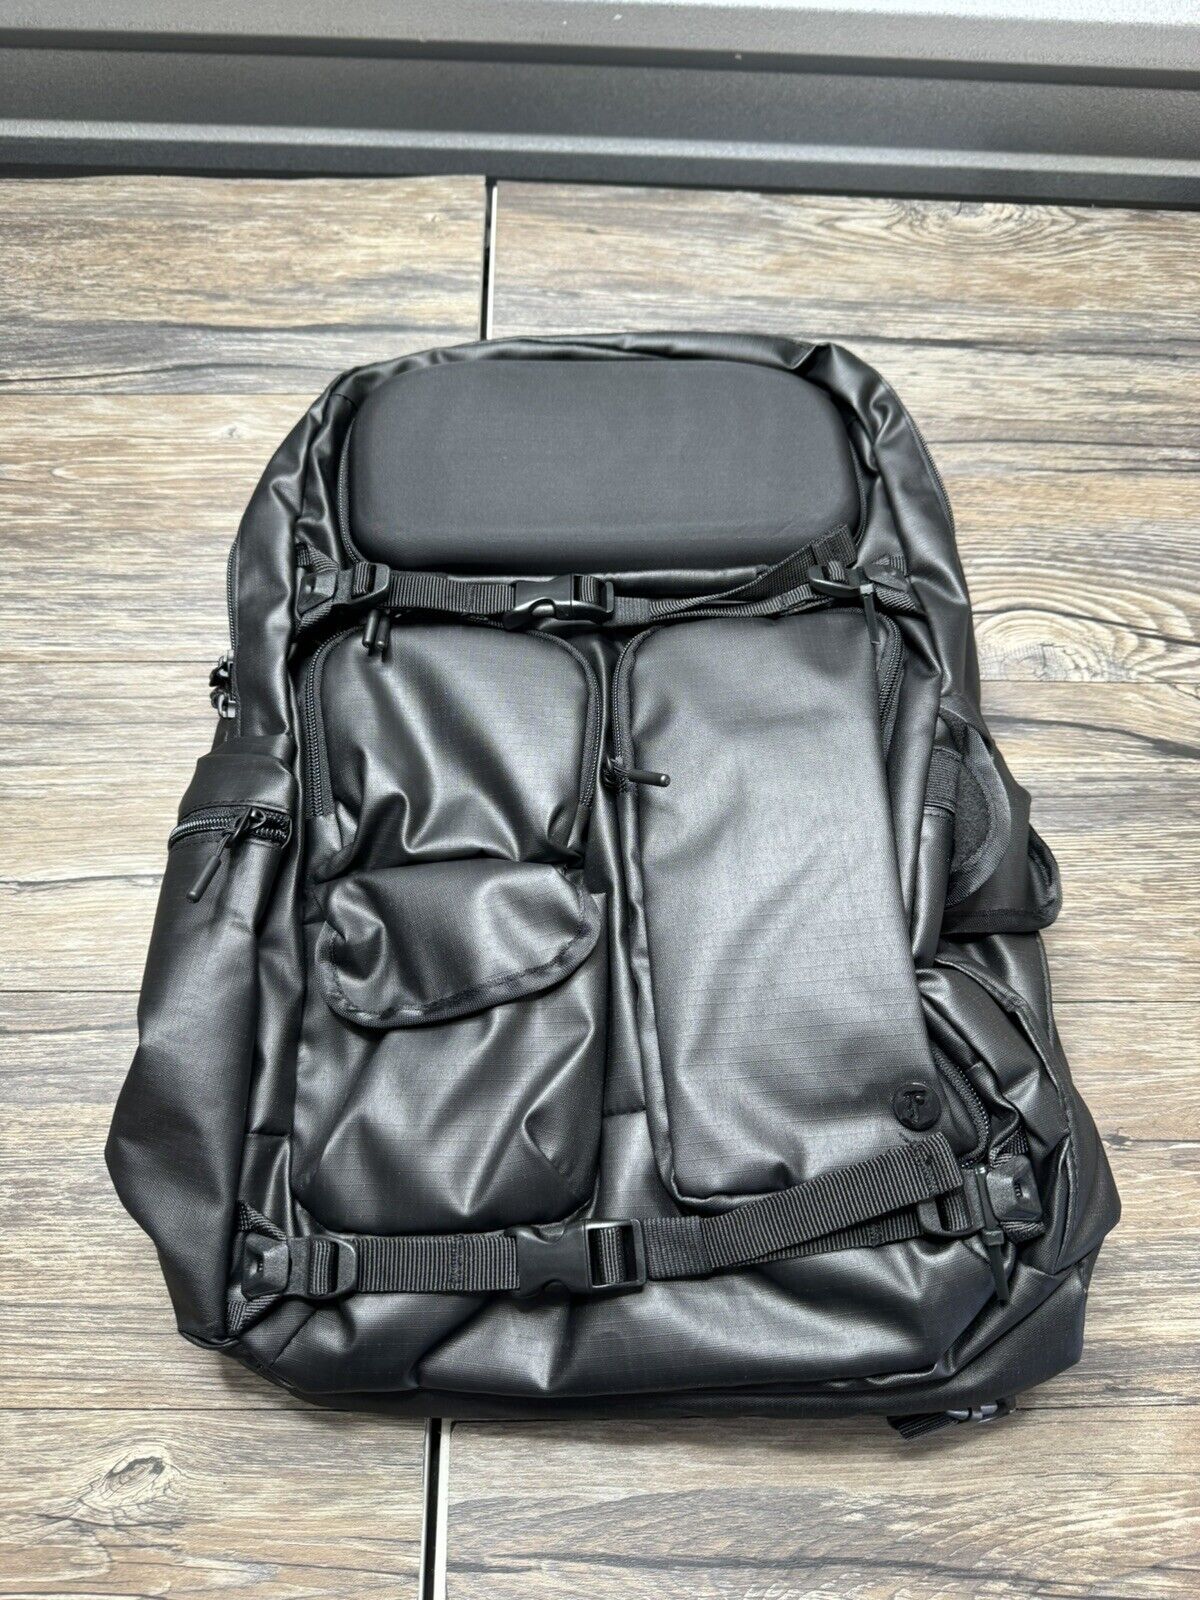 Forward Observations Group Overpass Bag Backpack Black New